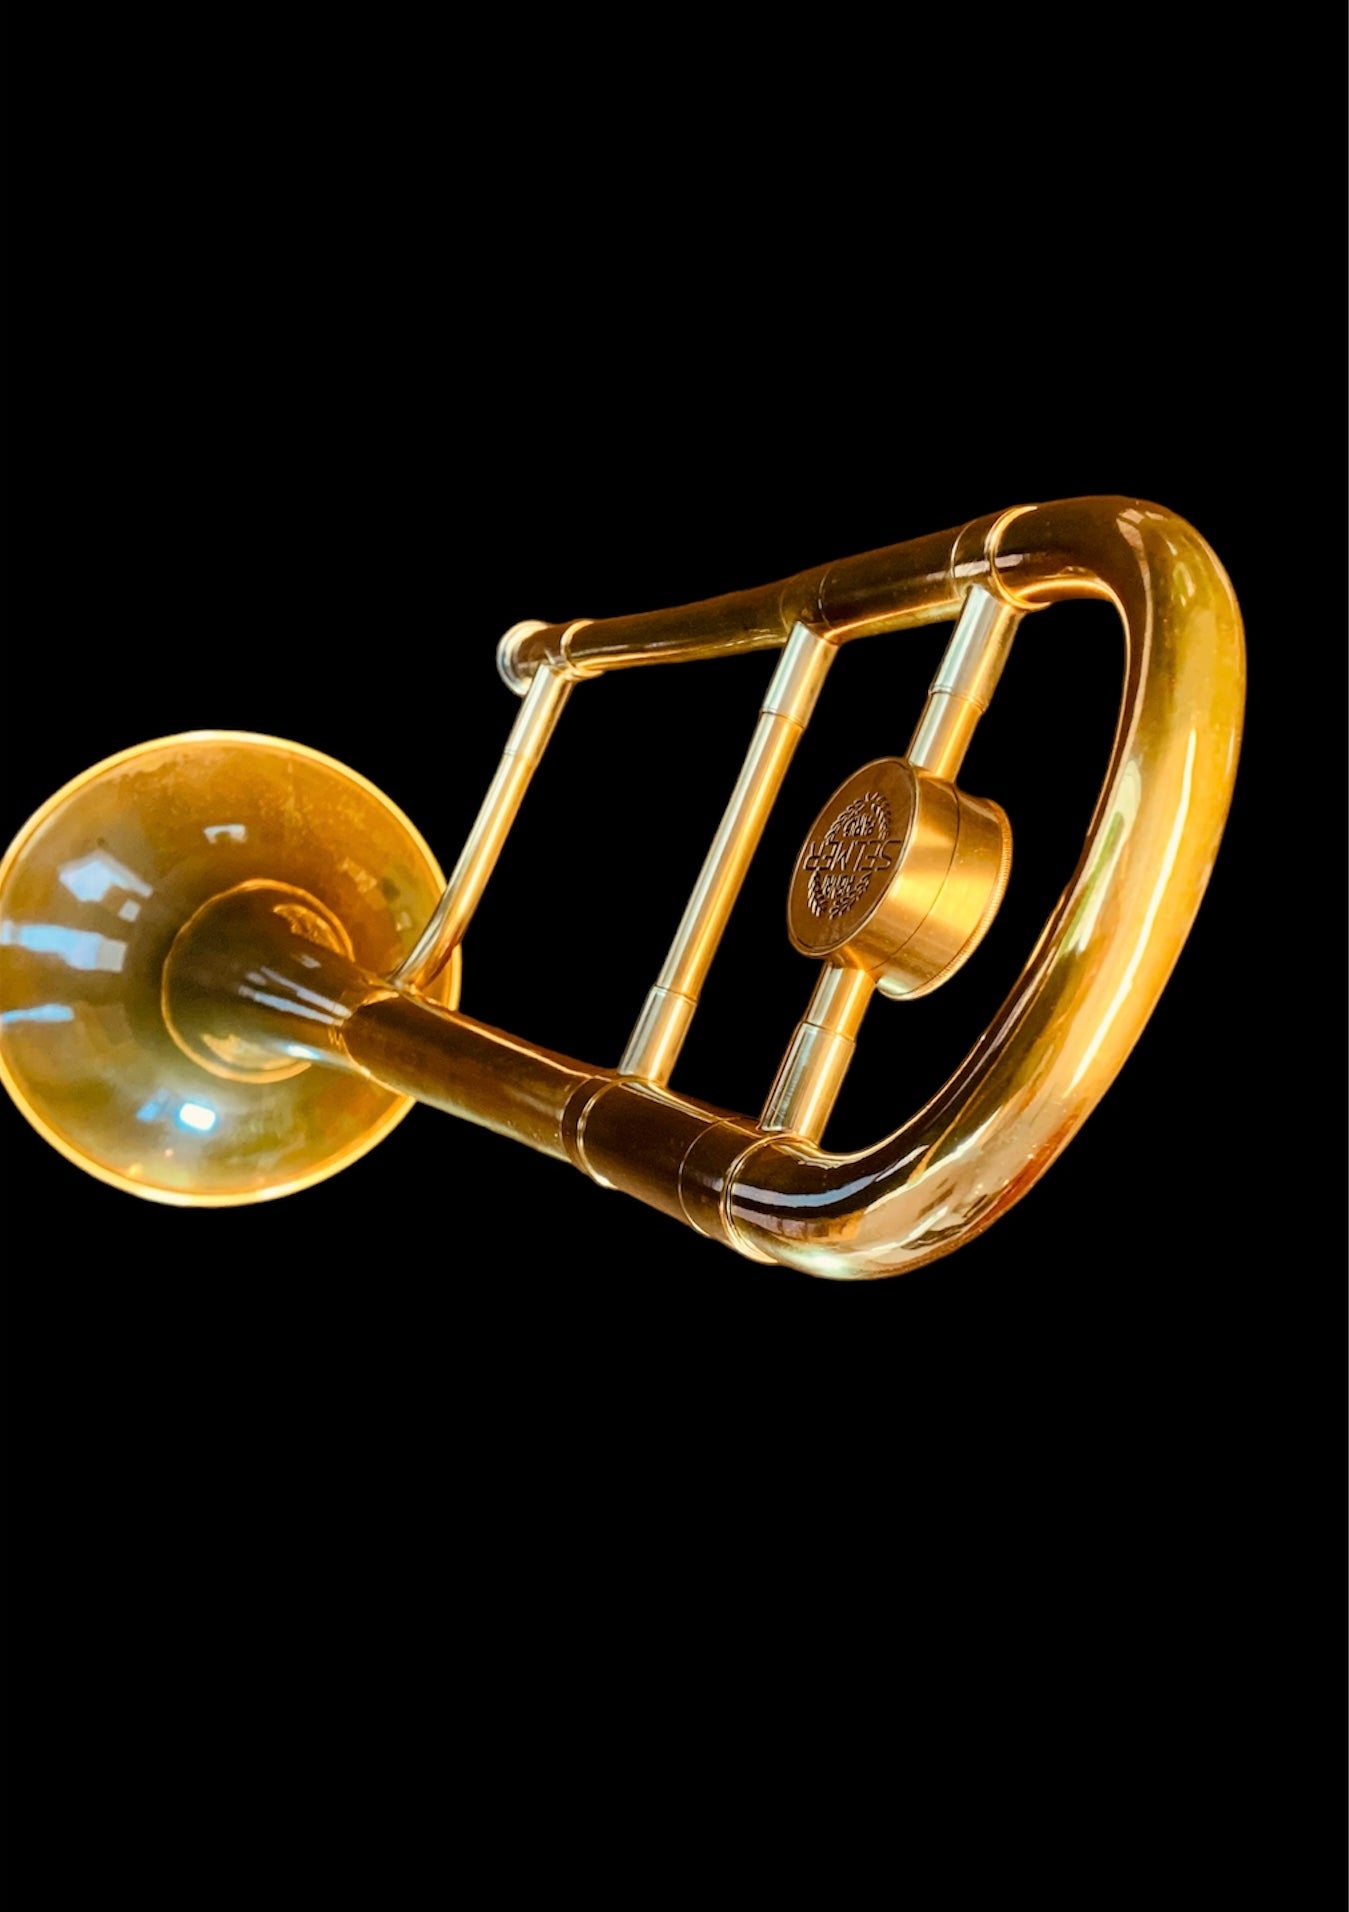 Trombone Selmer Paris